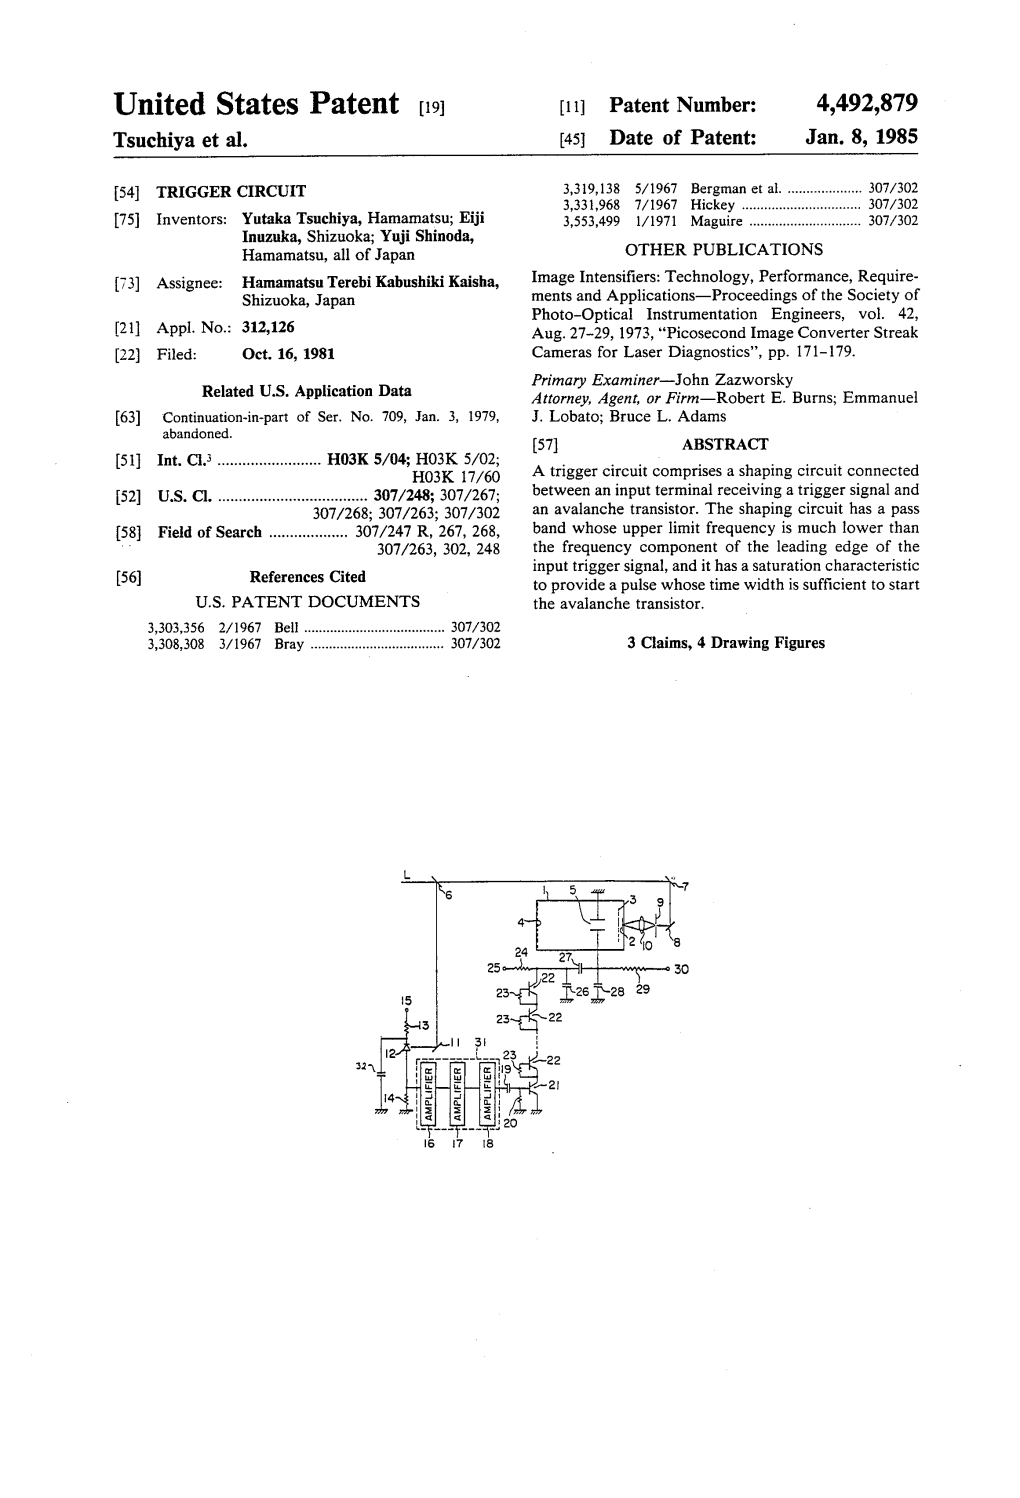 United States Patent (19) 11 Patent Number: 4,492,879 Tsuchiya Et Al